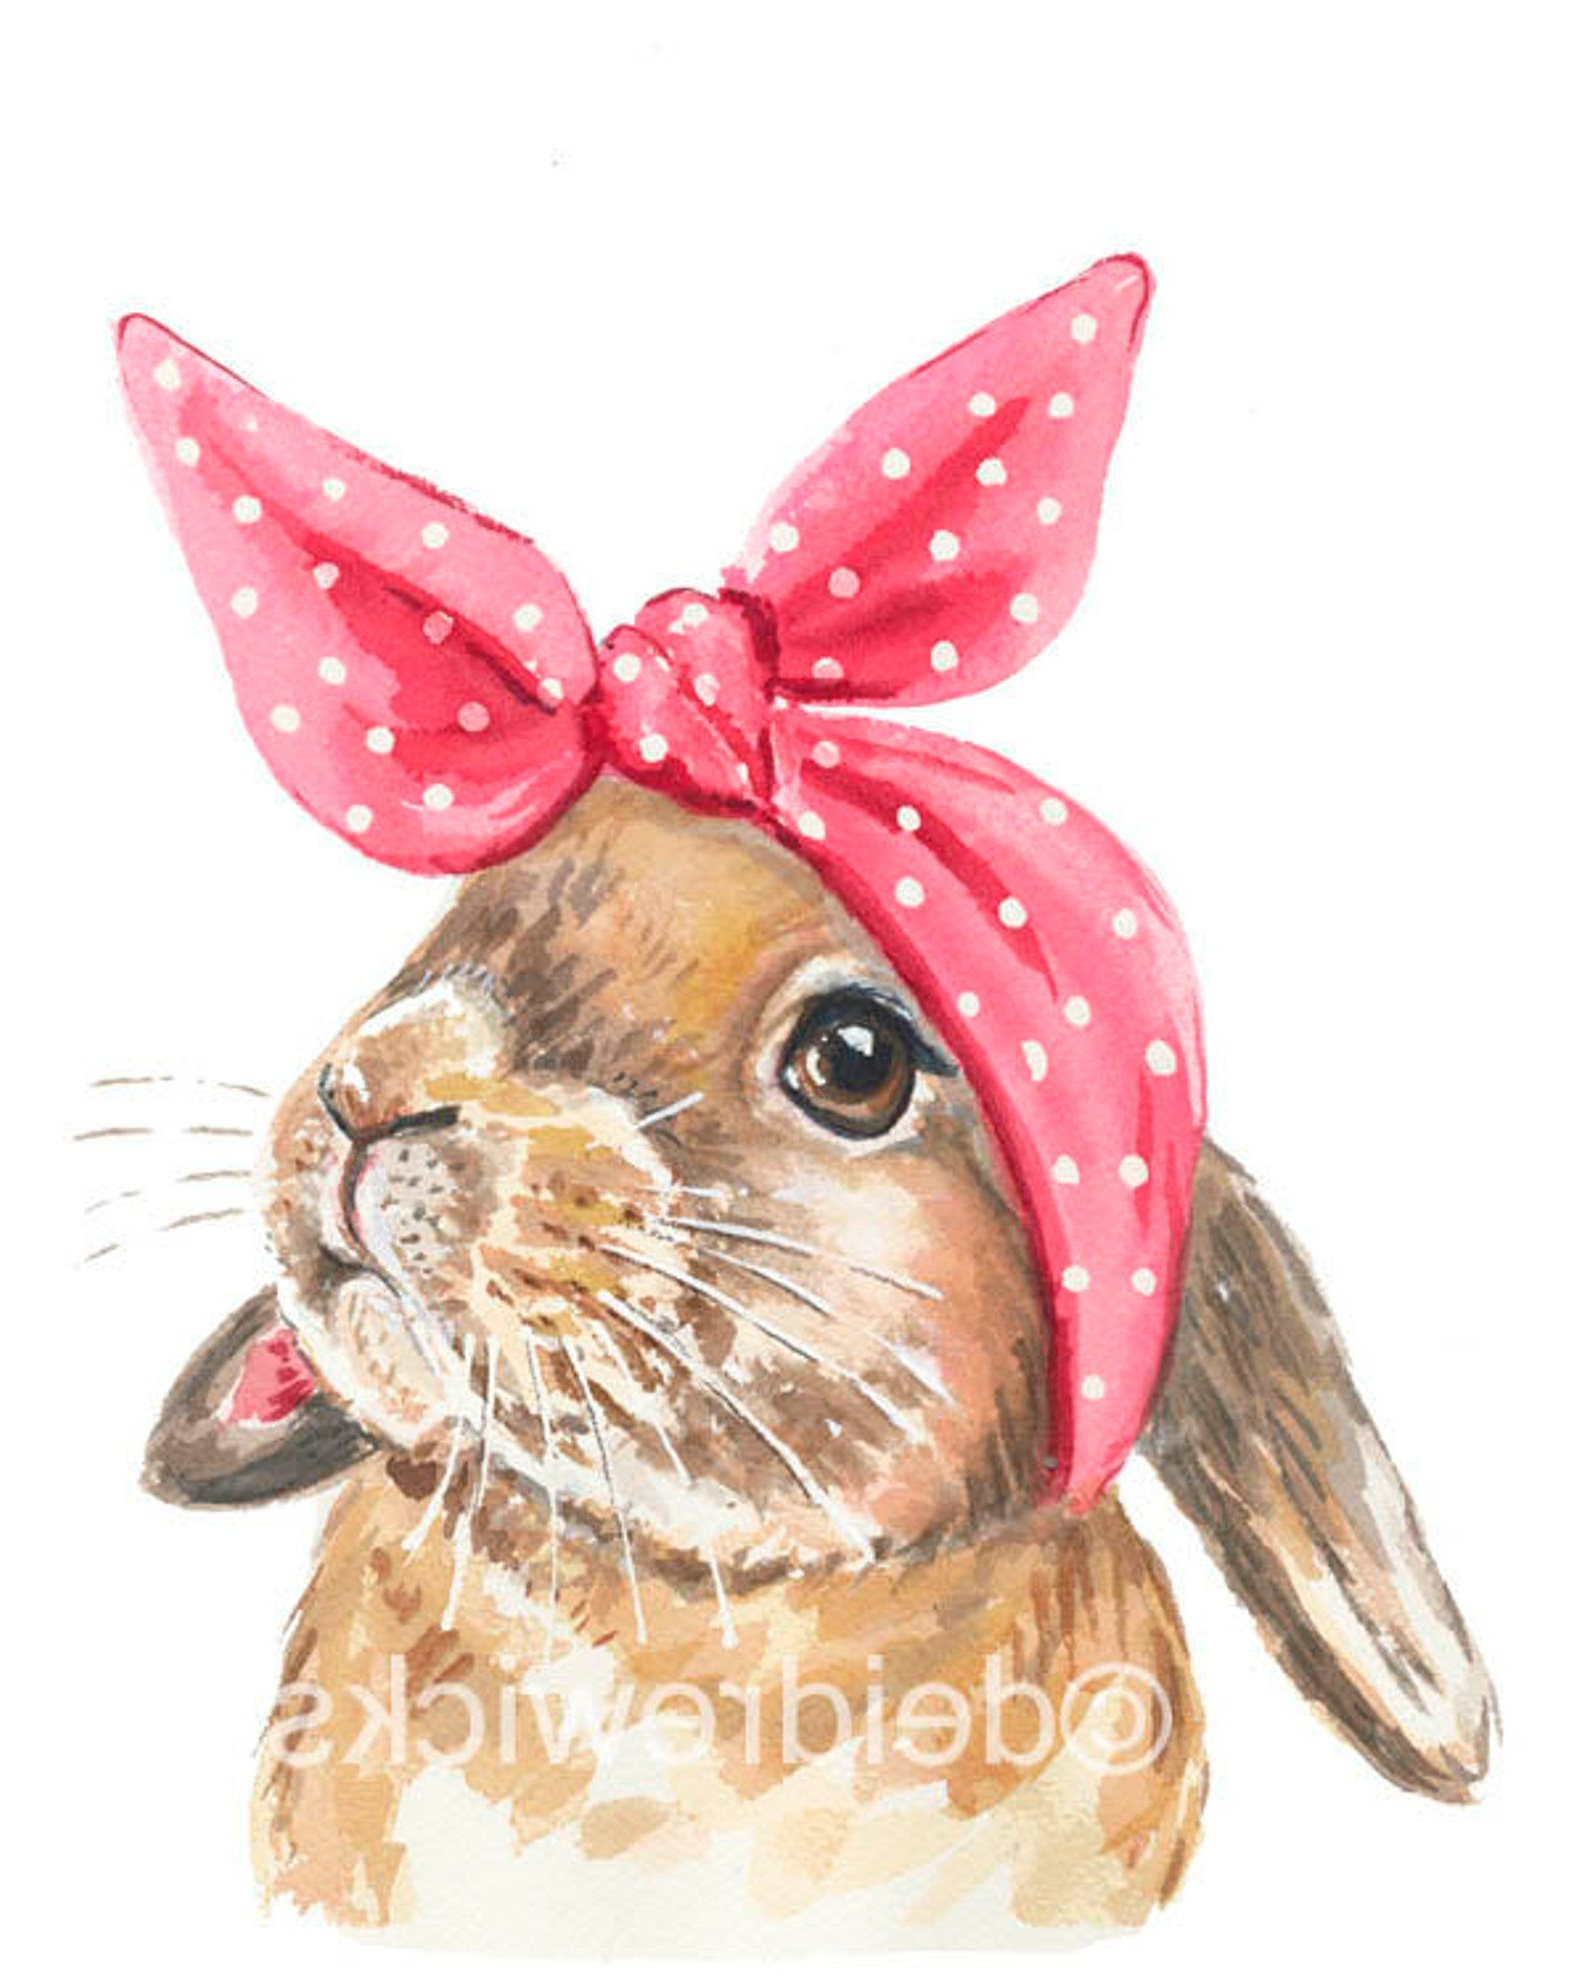 rabbit watercolour painting bunny print 1950s head scarf nursery art lop eared retro style